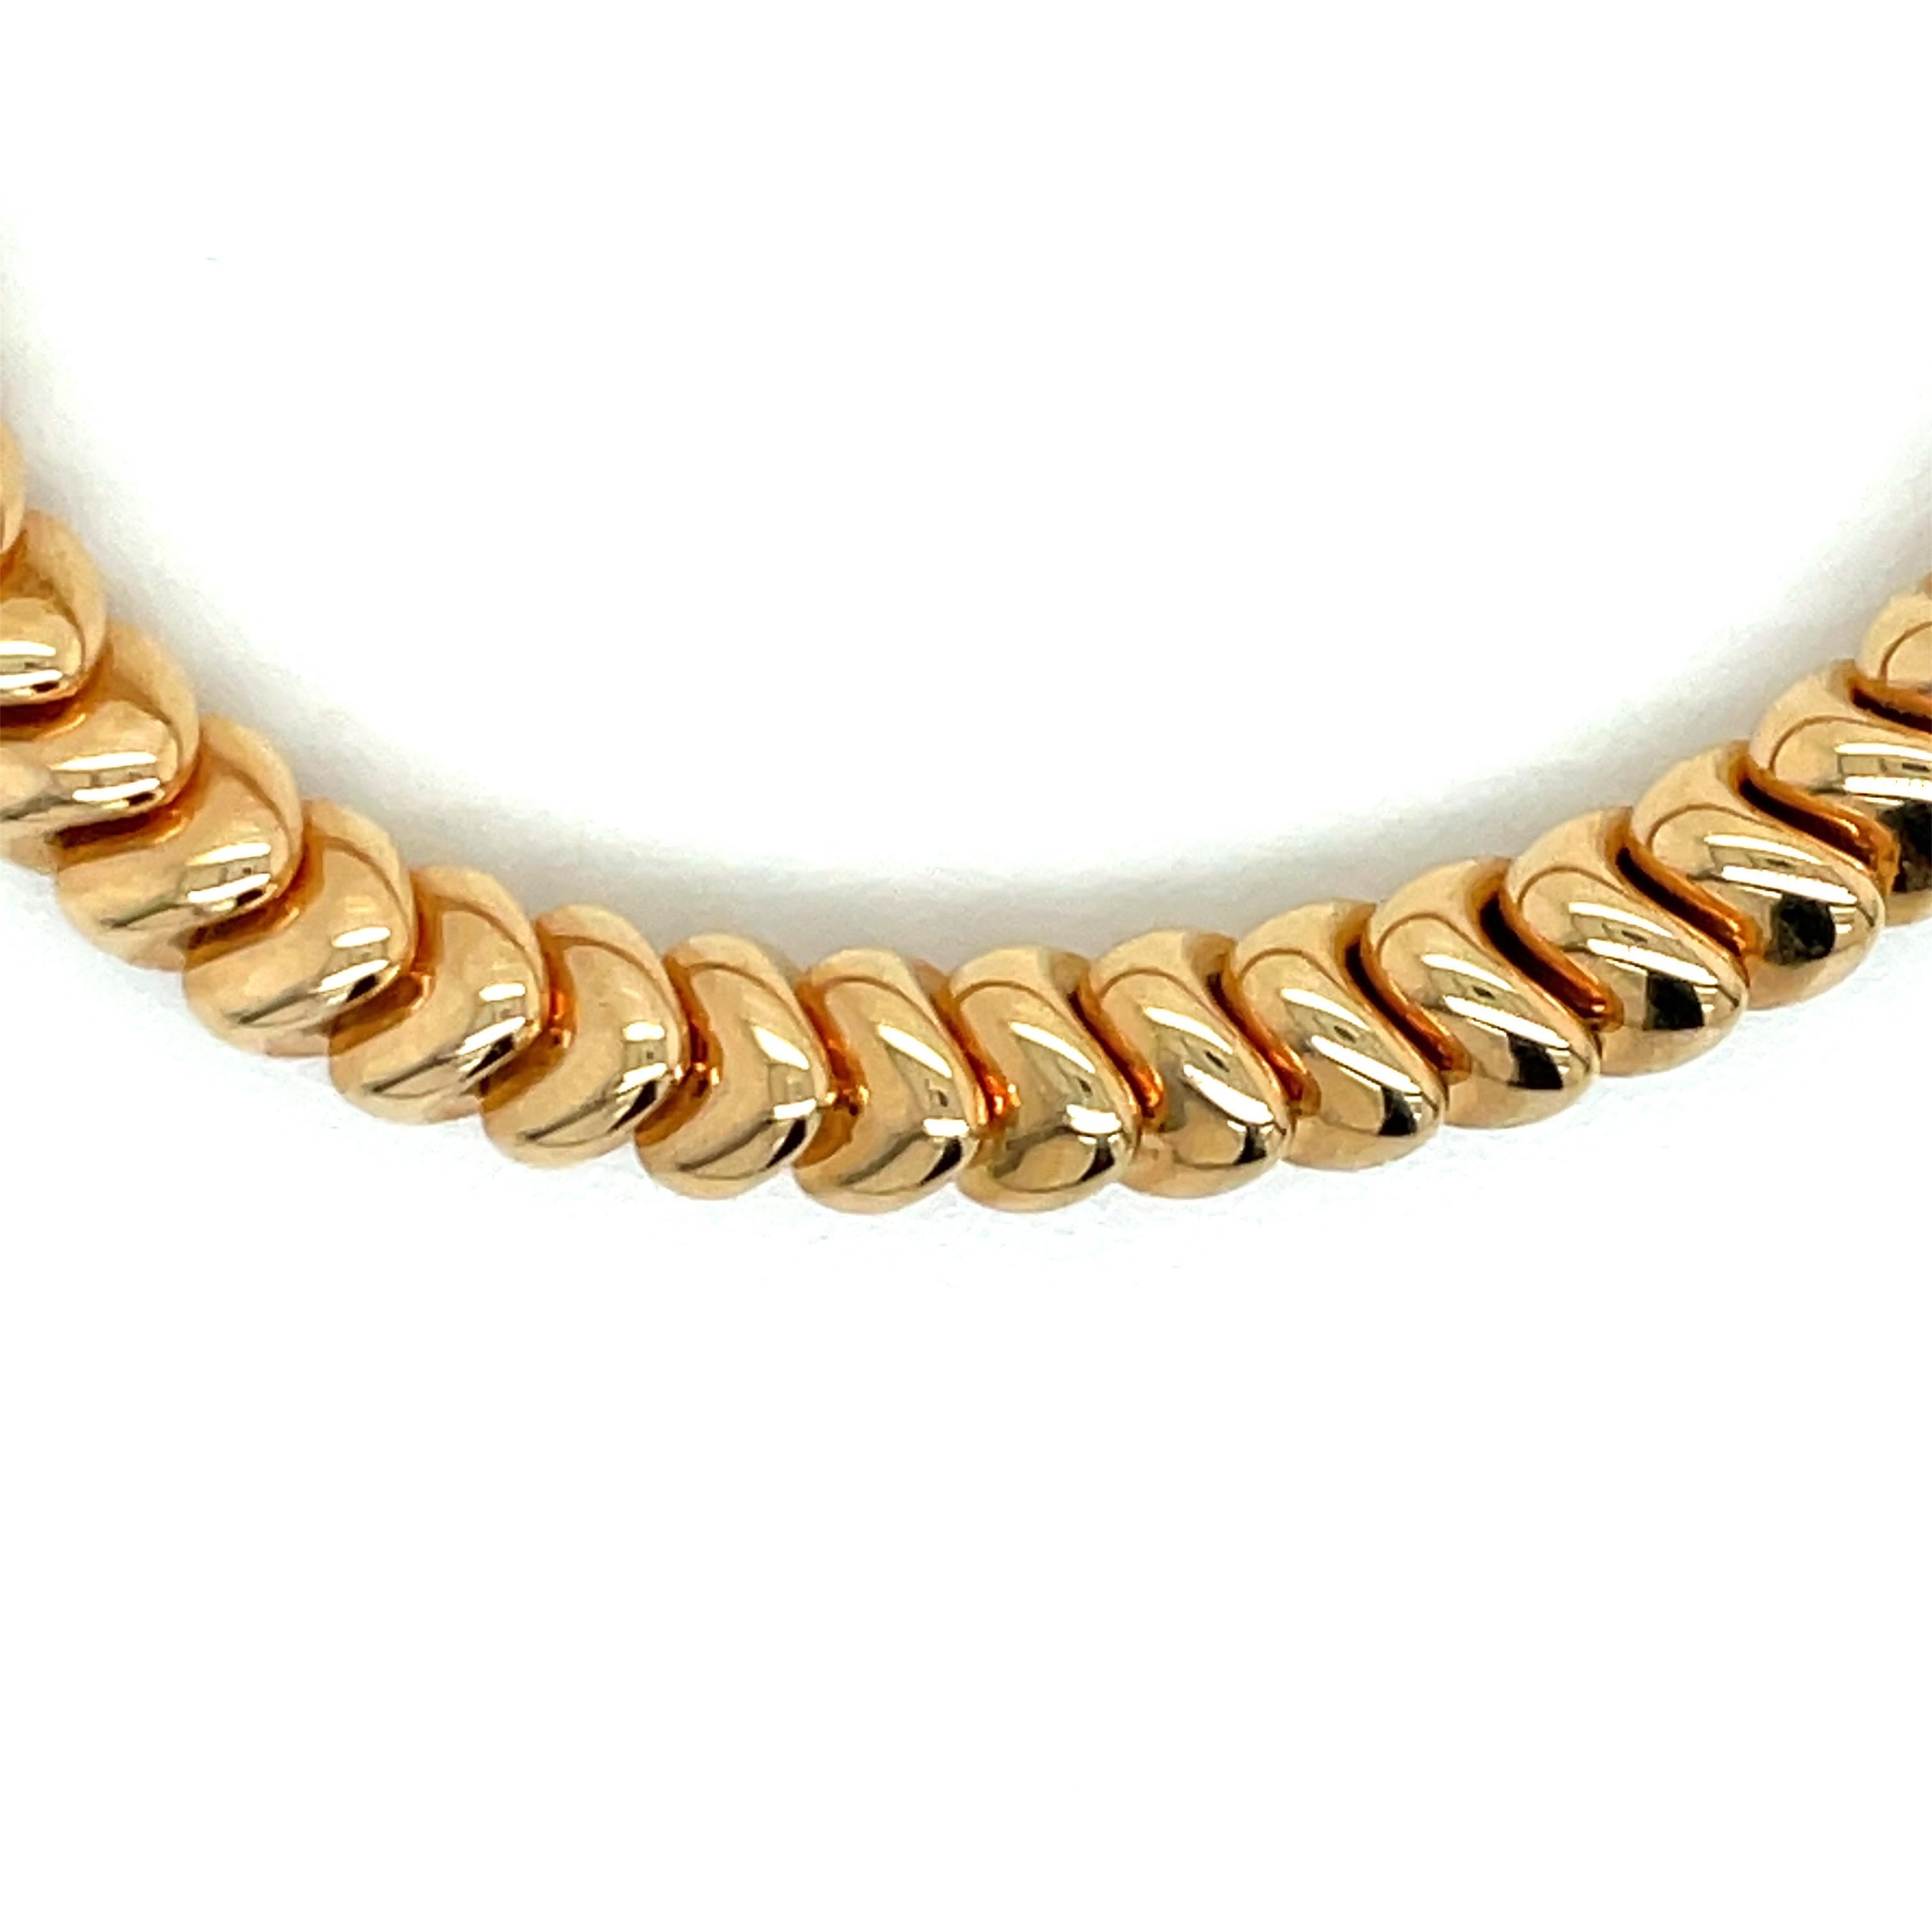 14 Karat Rose Gold link bracelet weighing 21.5 grams, Made in Italy.
Great for layering! 